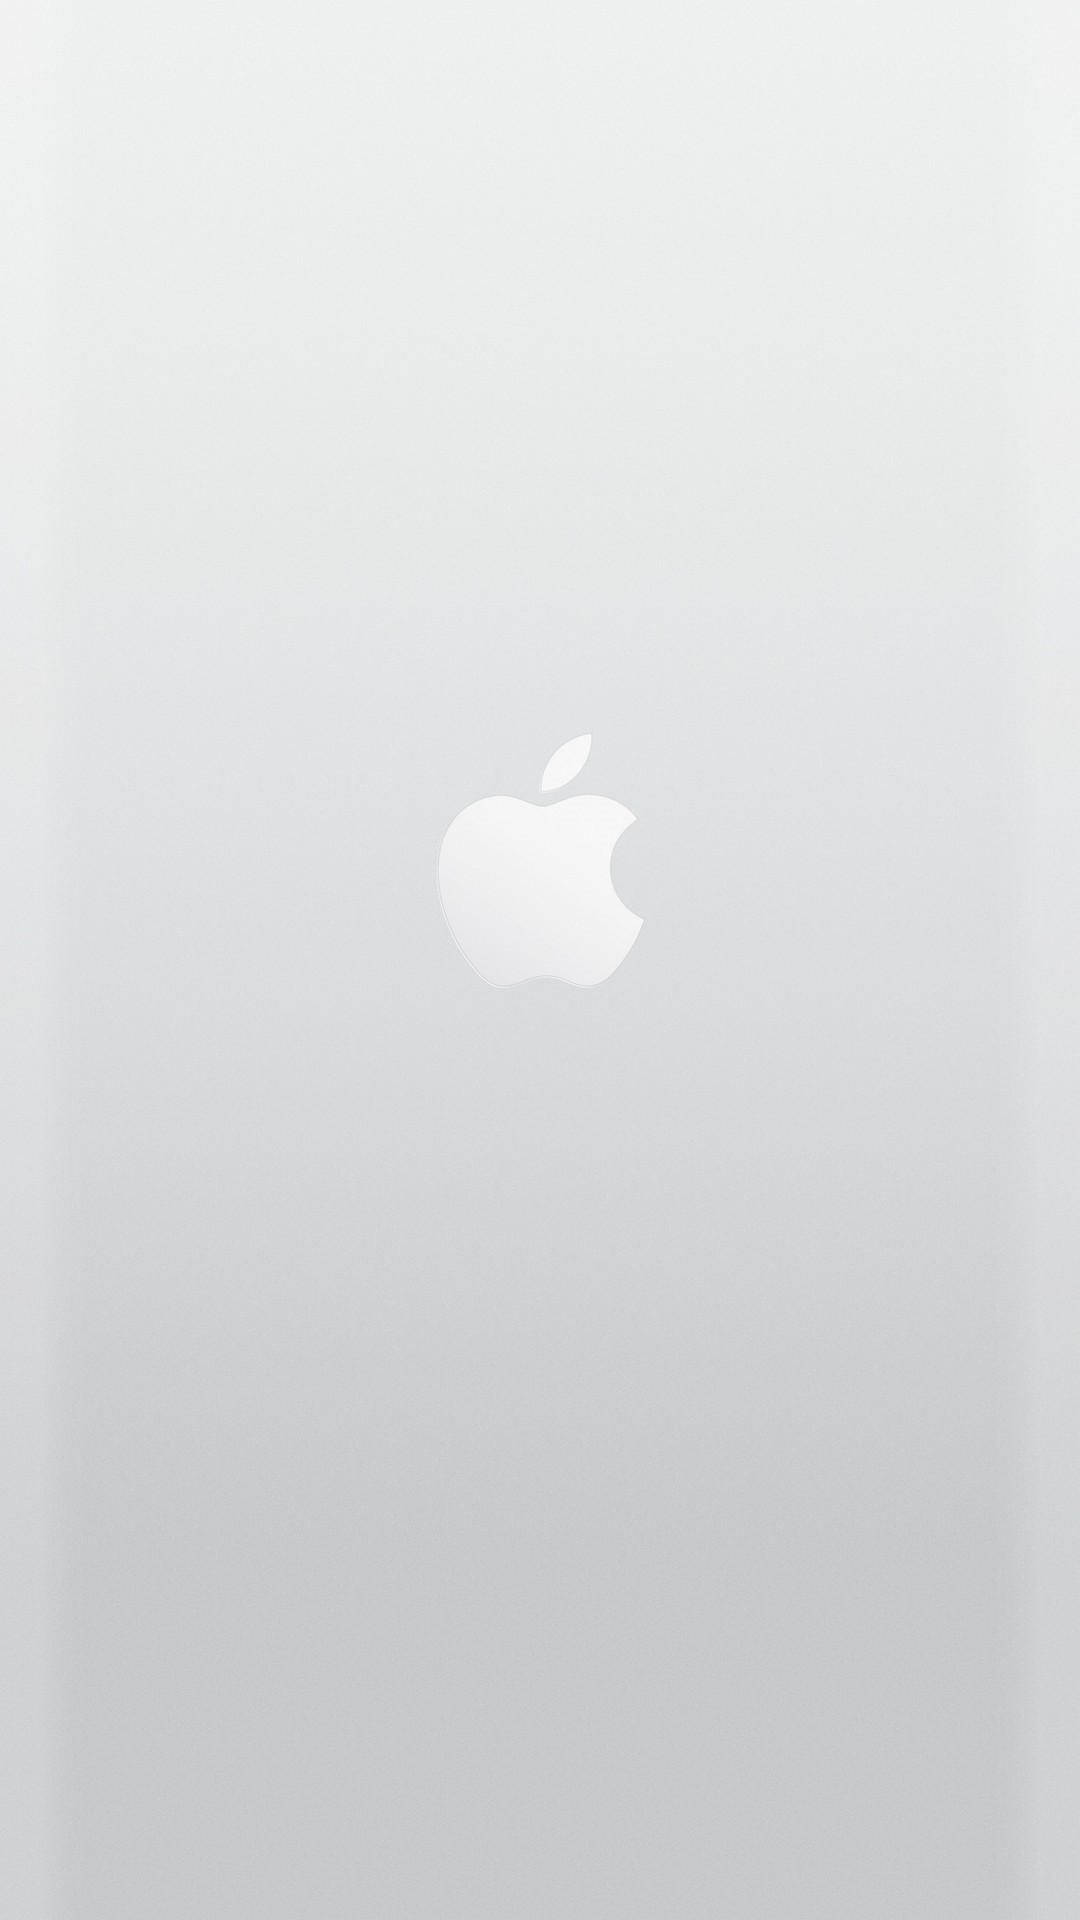 White Apple iPhone hd wallpaper